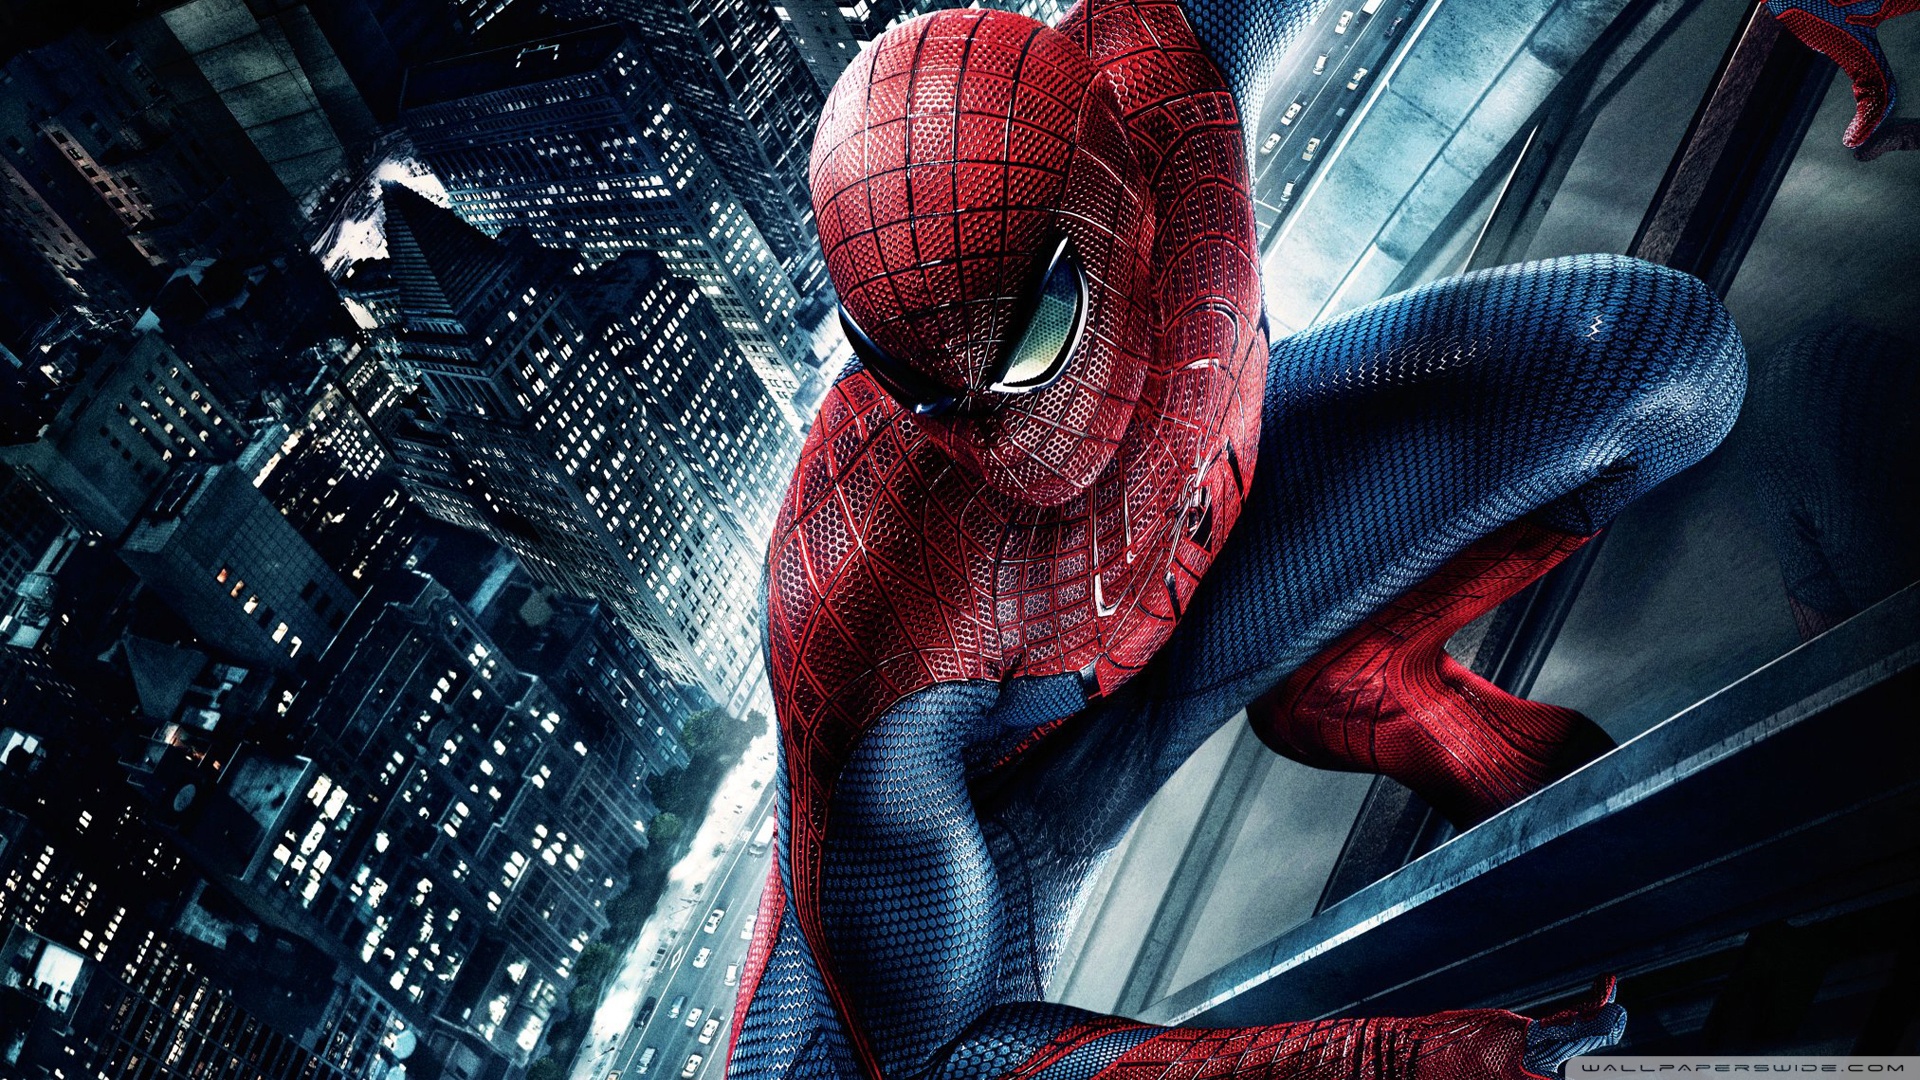 Download The Amazing Spider Man 6 Wallpaper 1920x1080 | Wallpoper ...